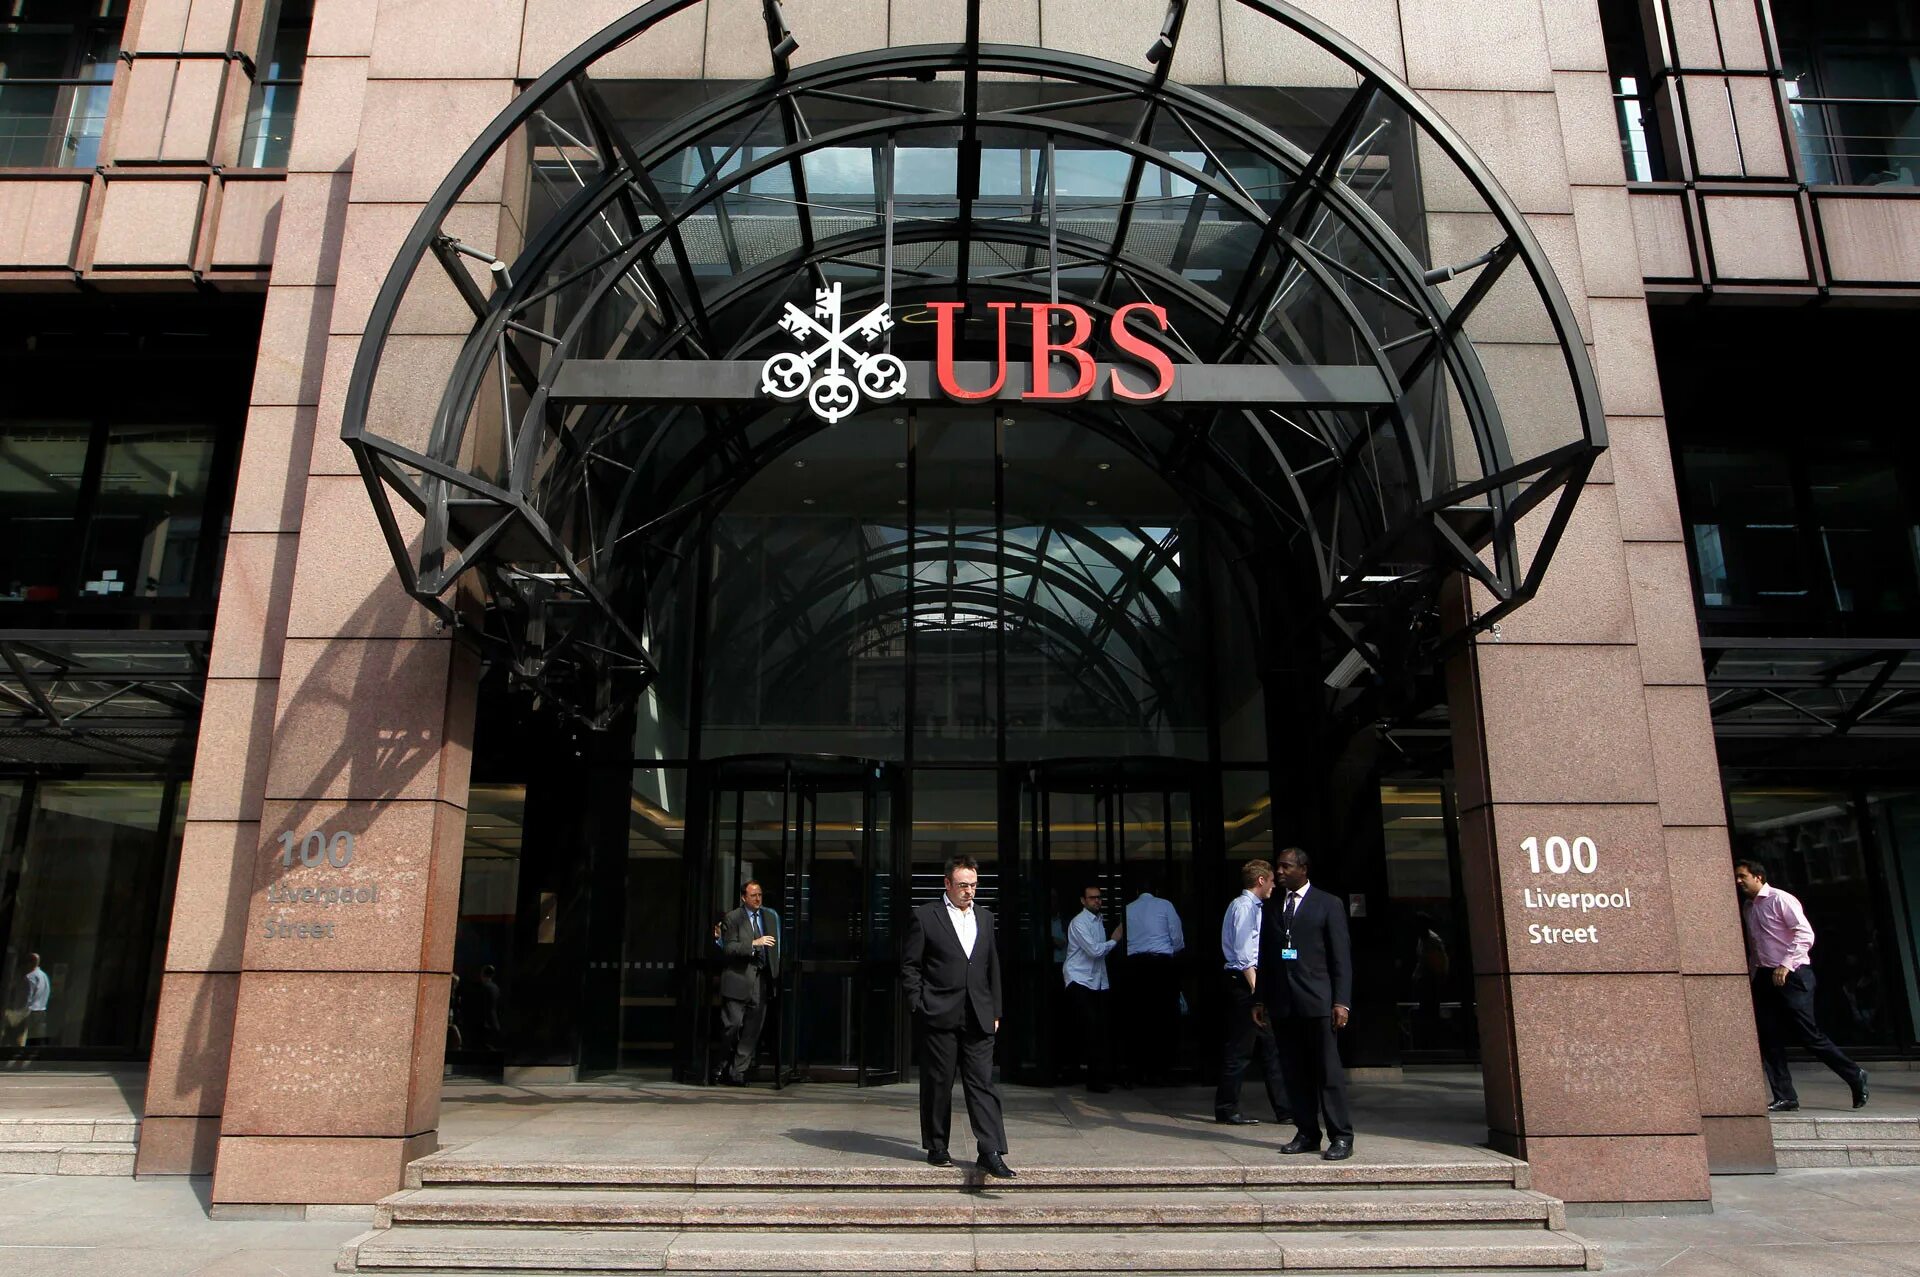 Банку ubs. Банк ЮБС Швейцария. Банки Швейцарии UBS. Здание UBS банка. Банк UBS главный офис.